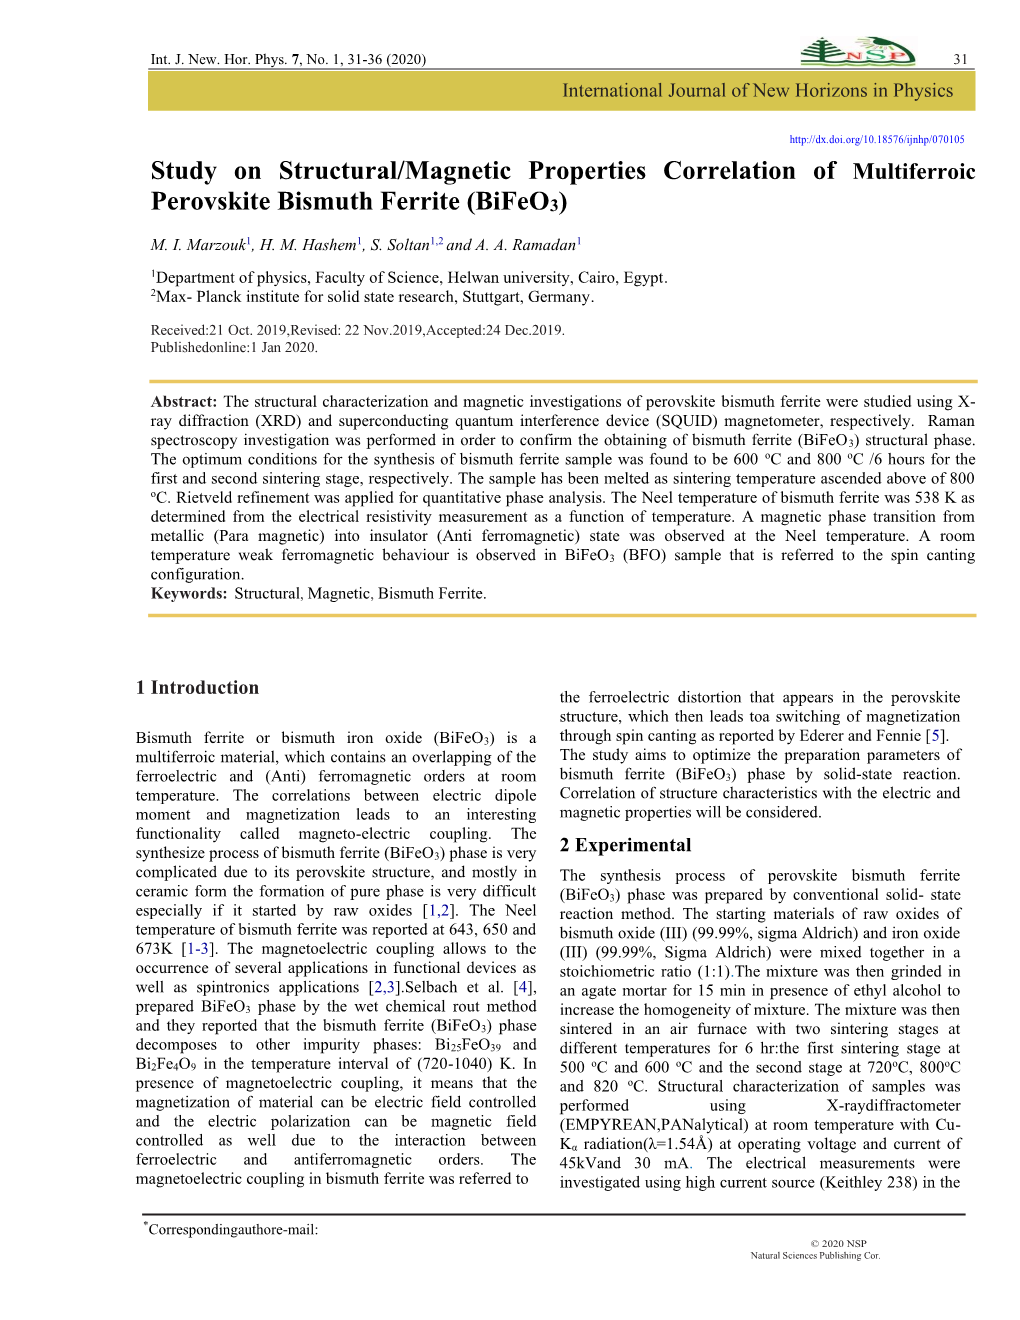 Study on Structural/Magnetic Properties Correlation of Multiferroic Perovskite Bismuth Ferrite (Bifeo3)